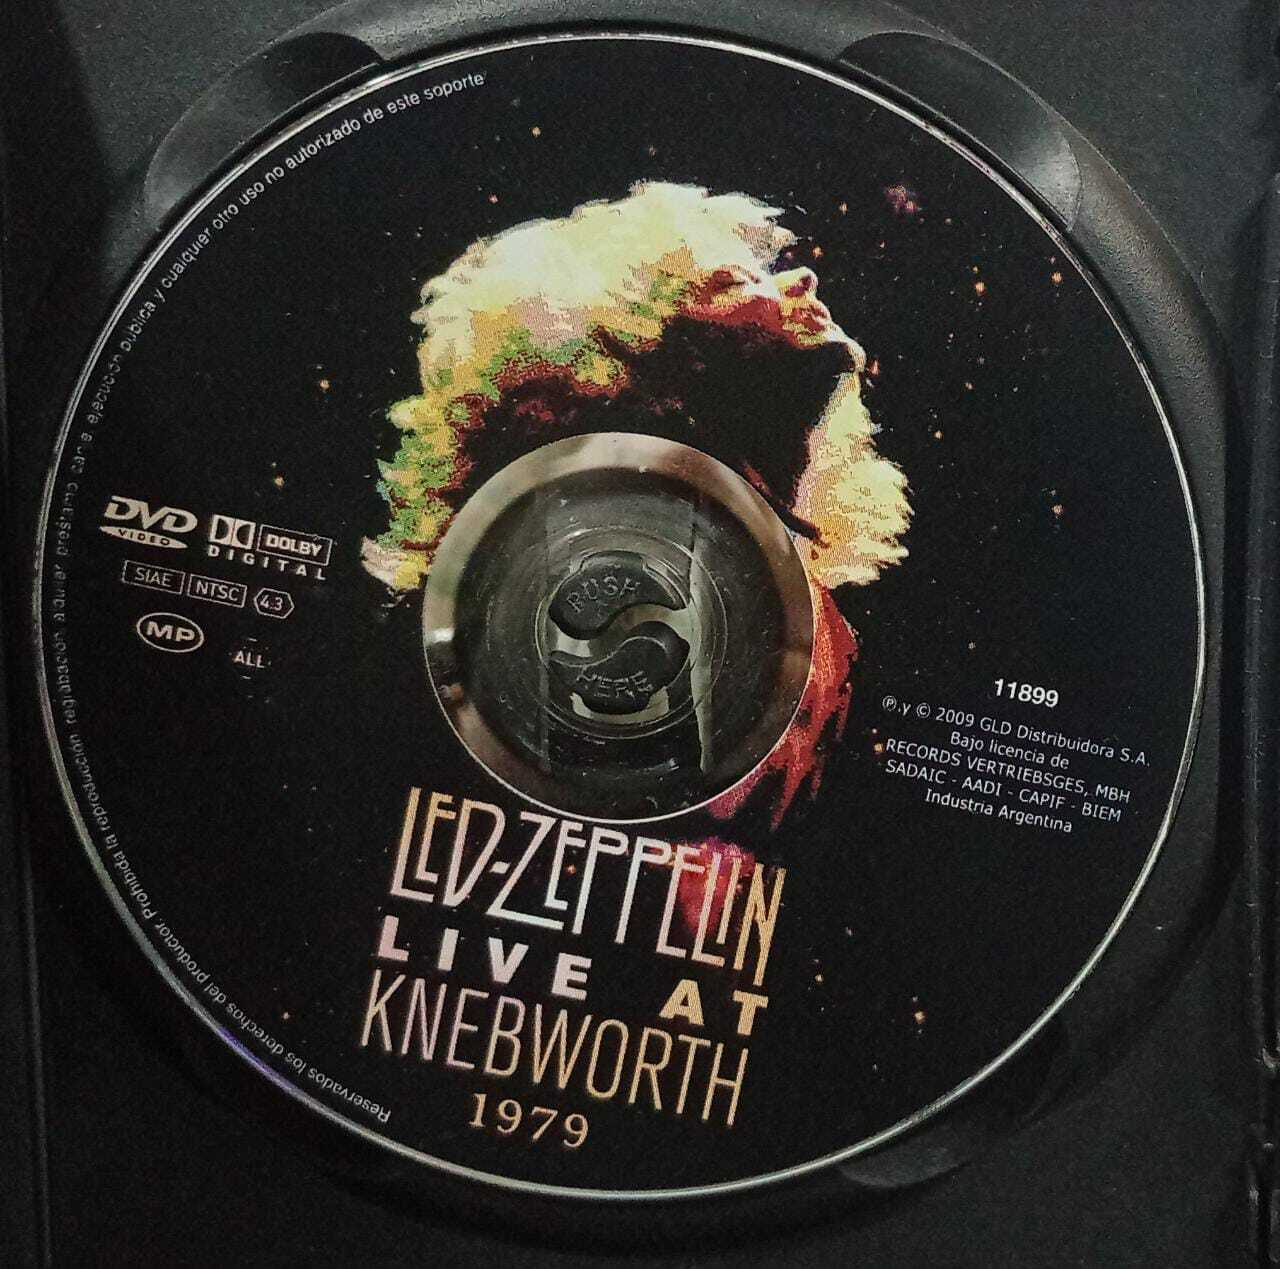 DVD - Led Zeppelin - Live At Knebworth 1979 (Imp)